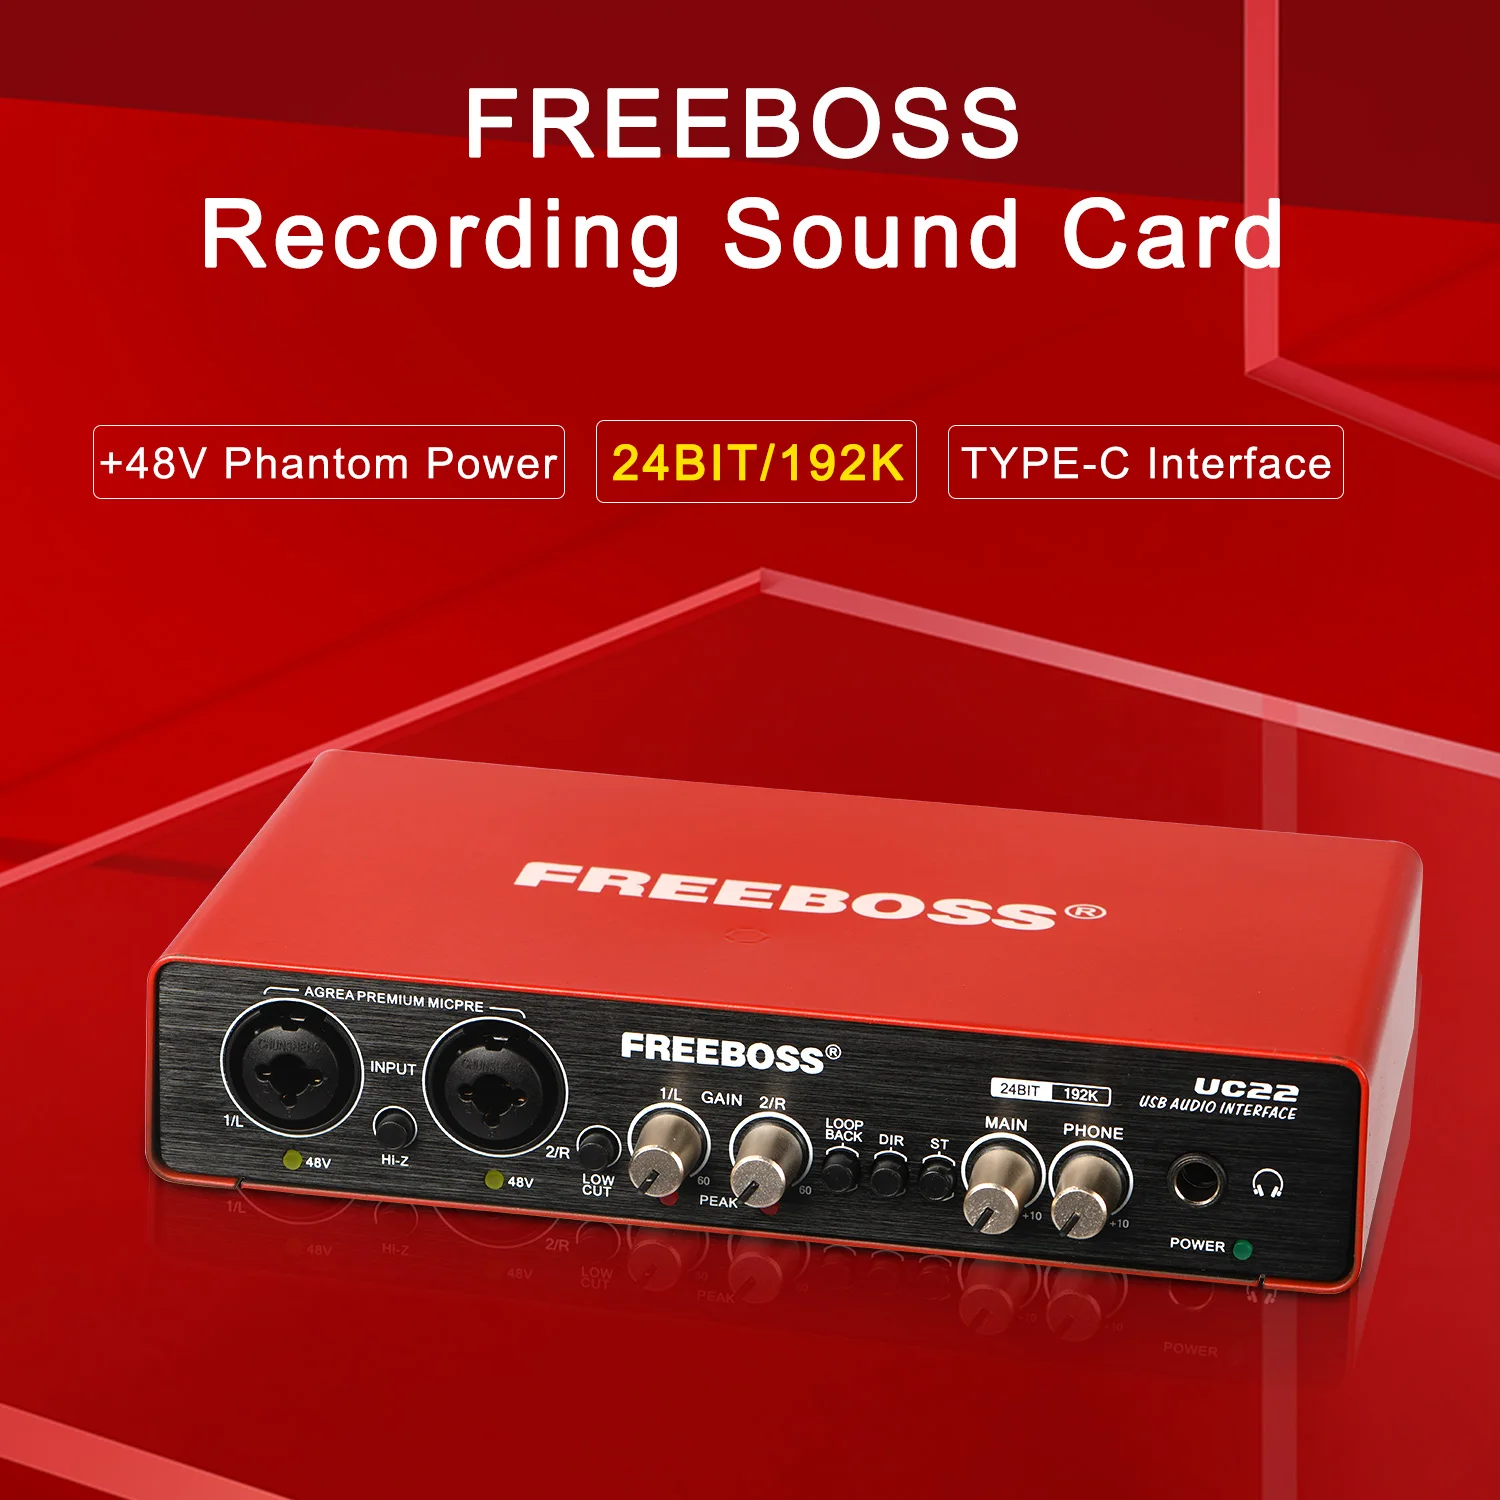 FREEBOSS Audio Interface Professional 192KHz Recording Loopback Hi-z Guitar USB DC 5V External Sound Card 48V Phantom Power UC22 enlarge